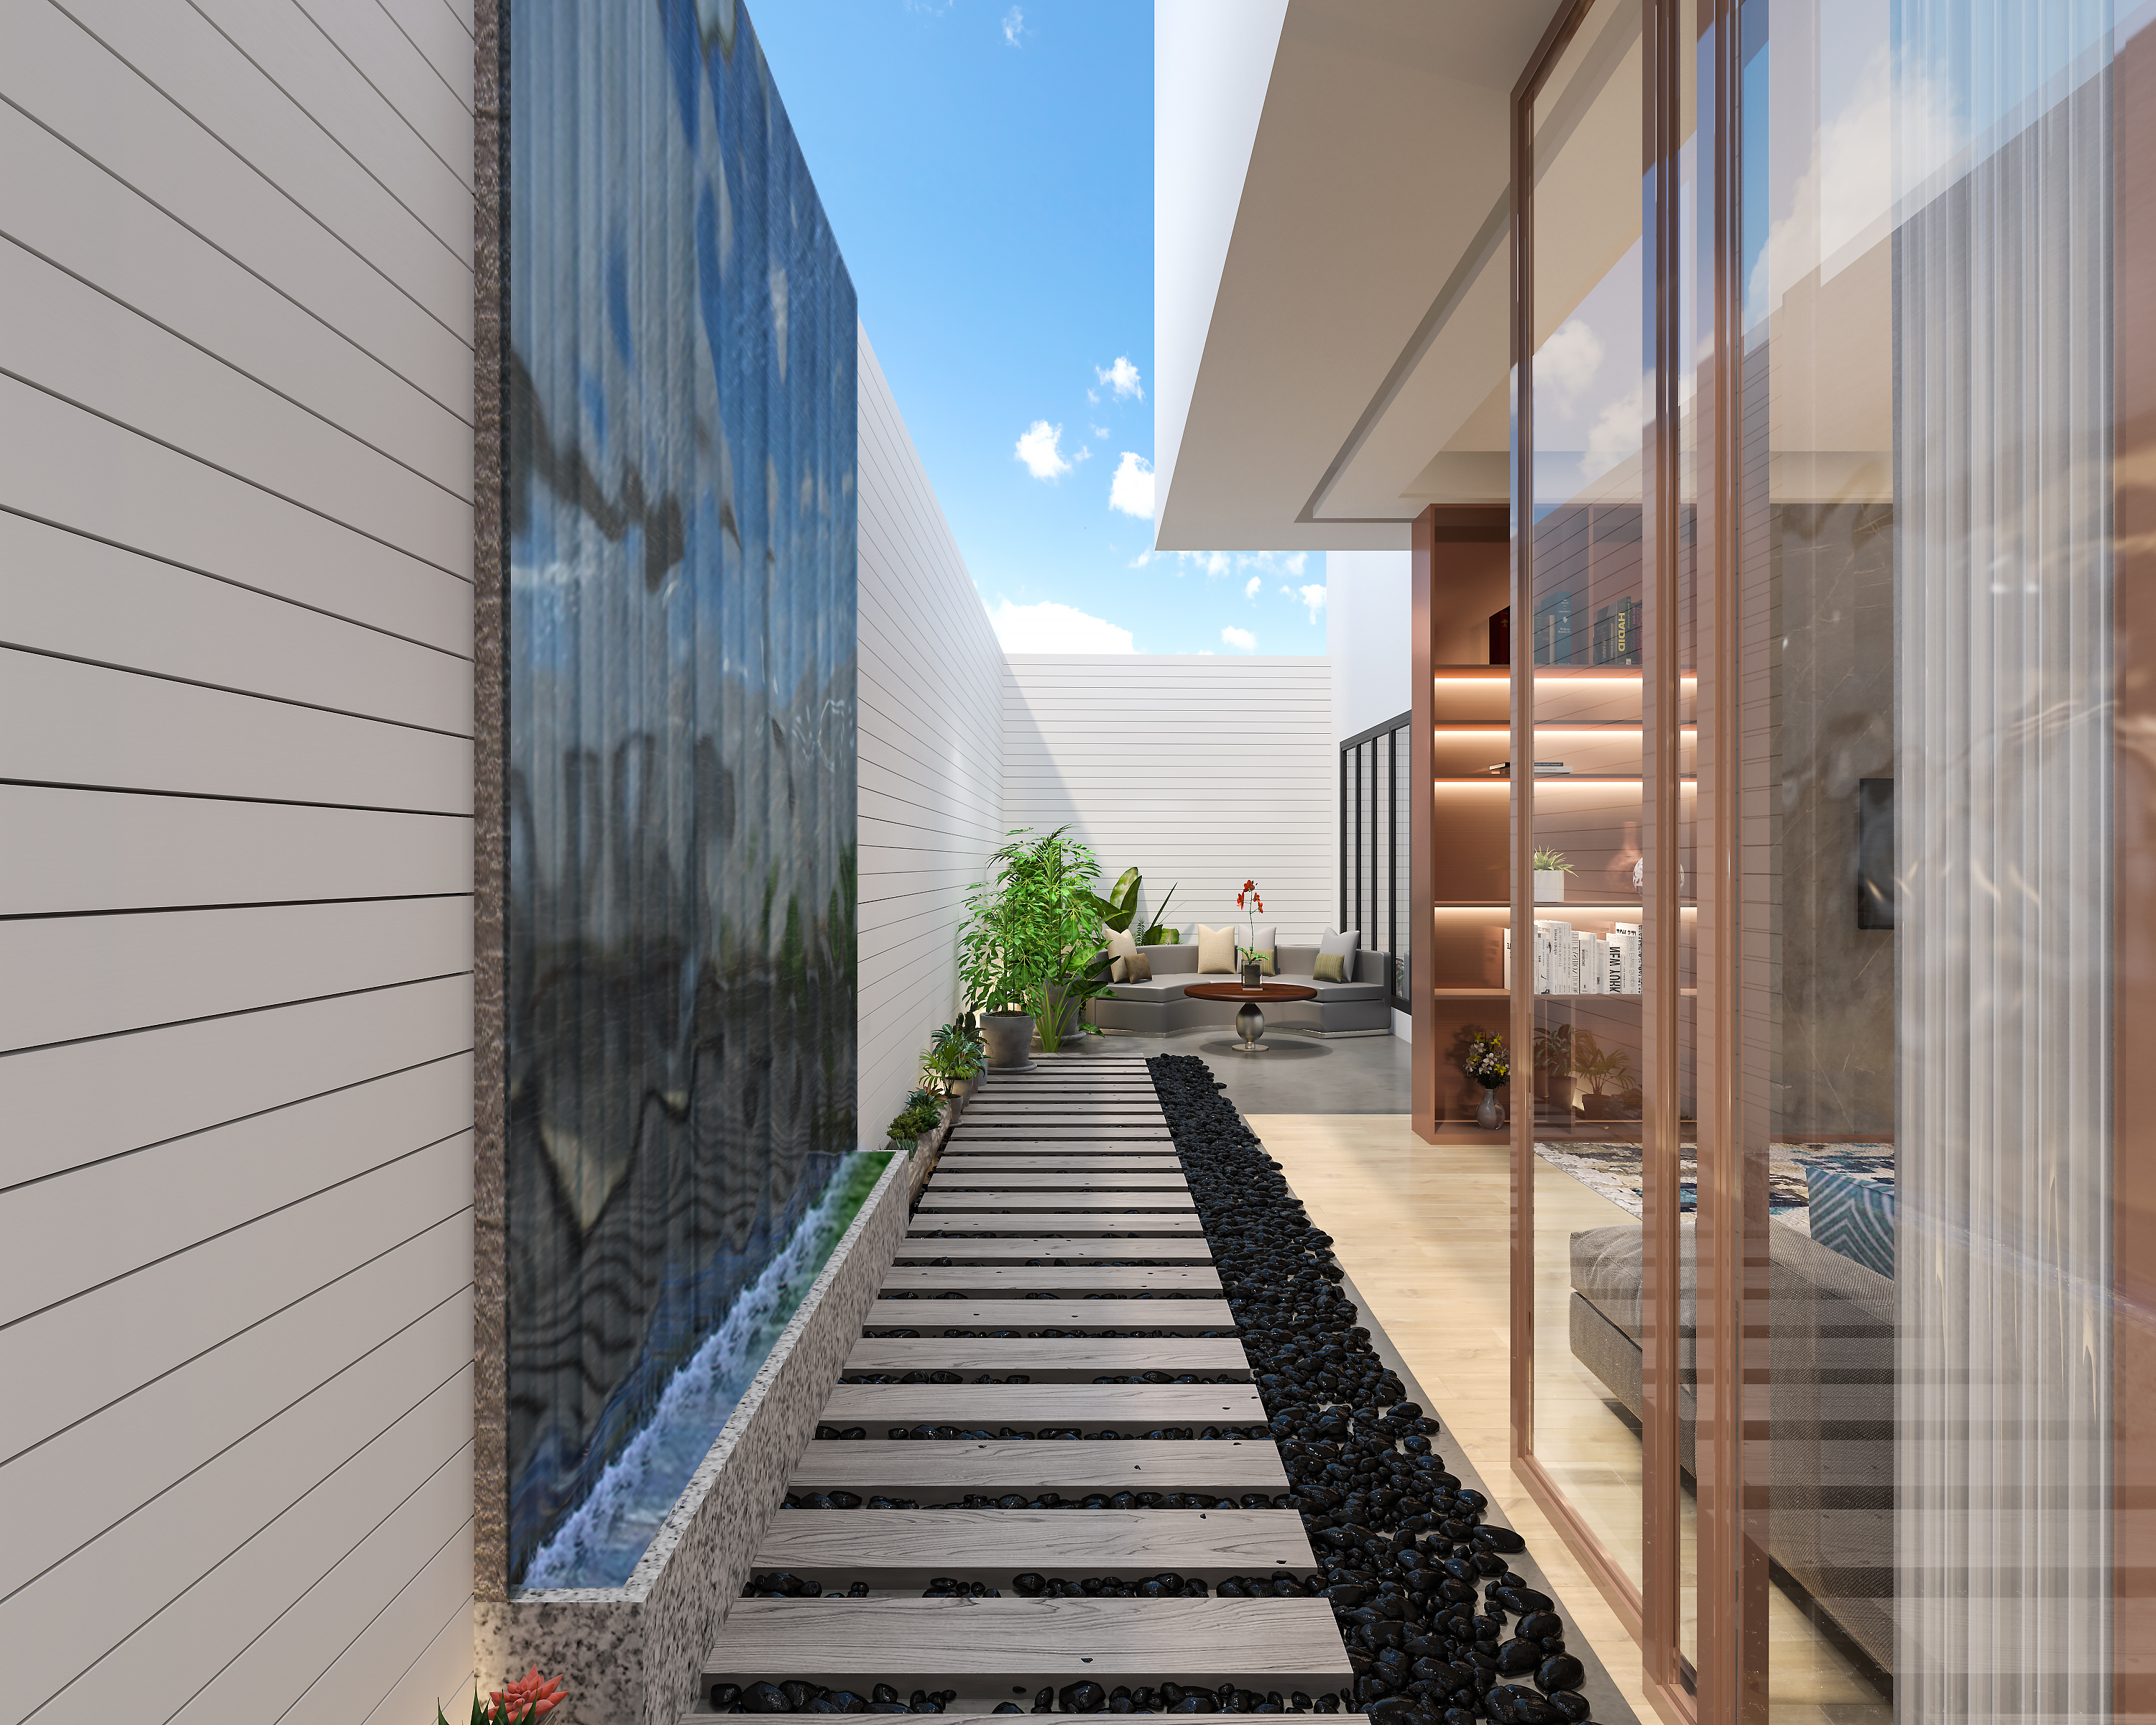 Yeung Sze Man, Blair 設計師最新紀錄 - 2400 s.f. modern residential interior design (2019-DEC，網頁設計)